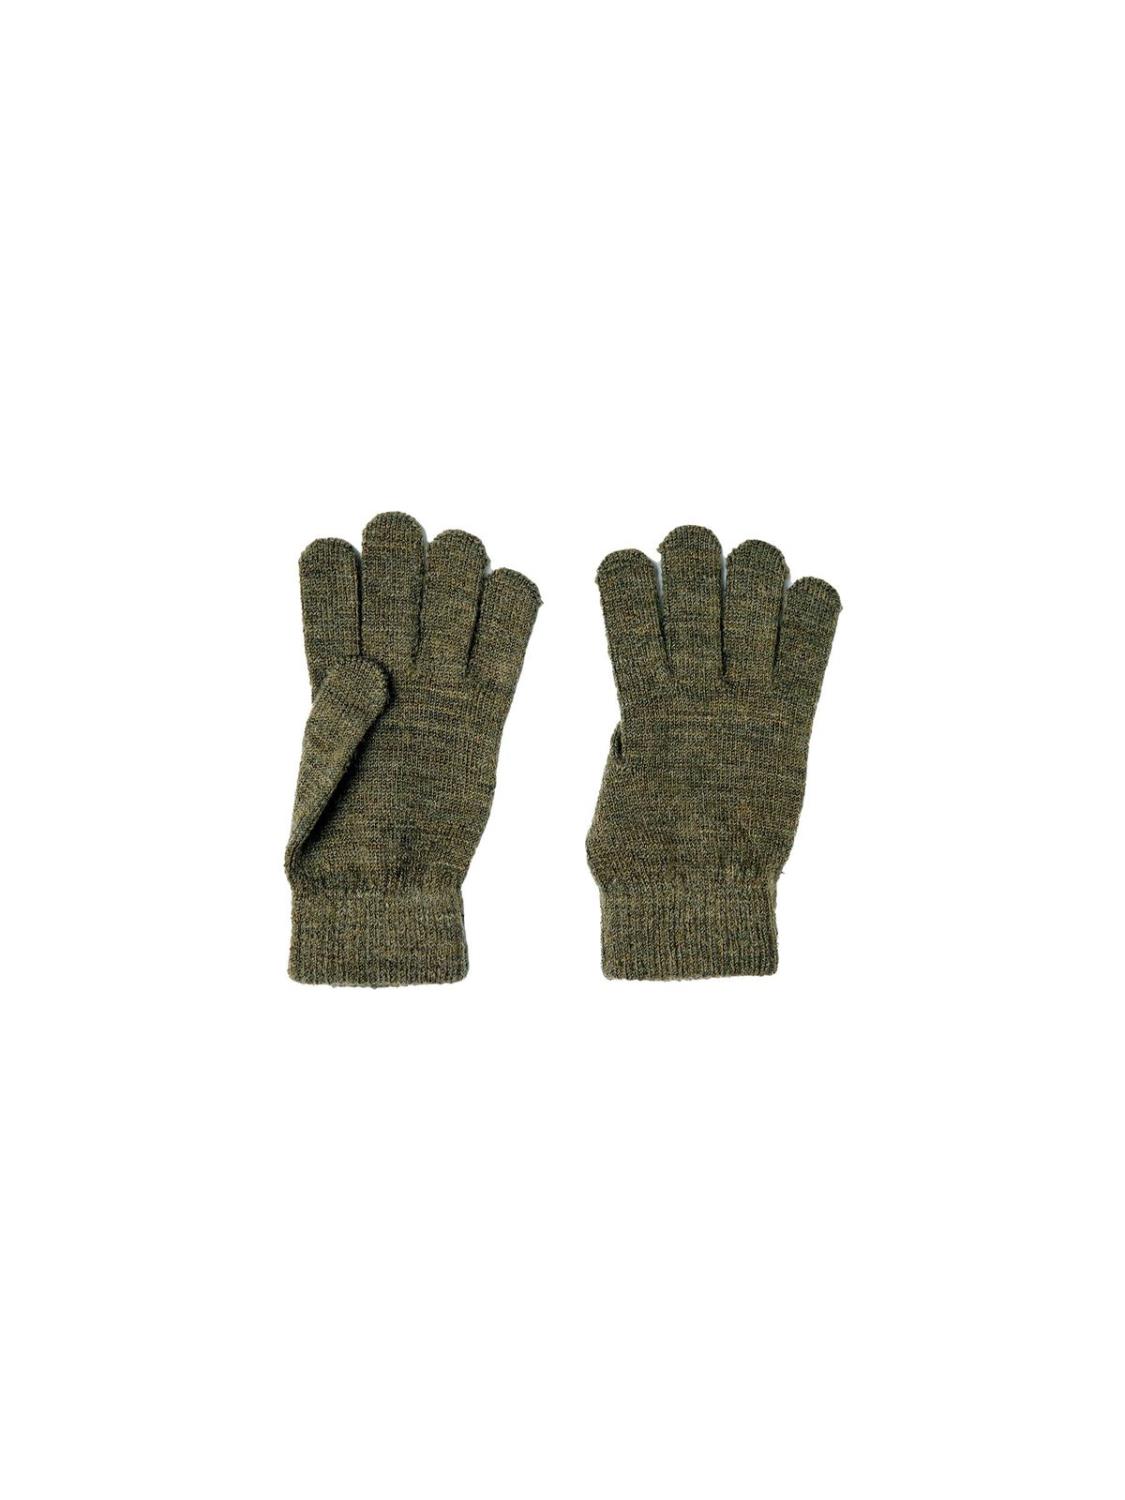 Wholla Wool Gloves - Tarmac